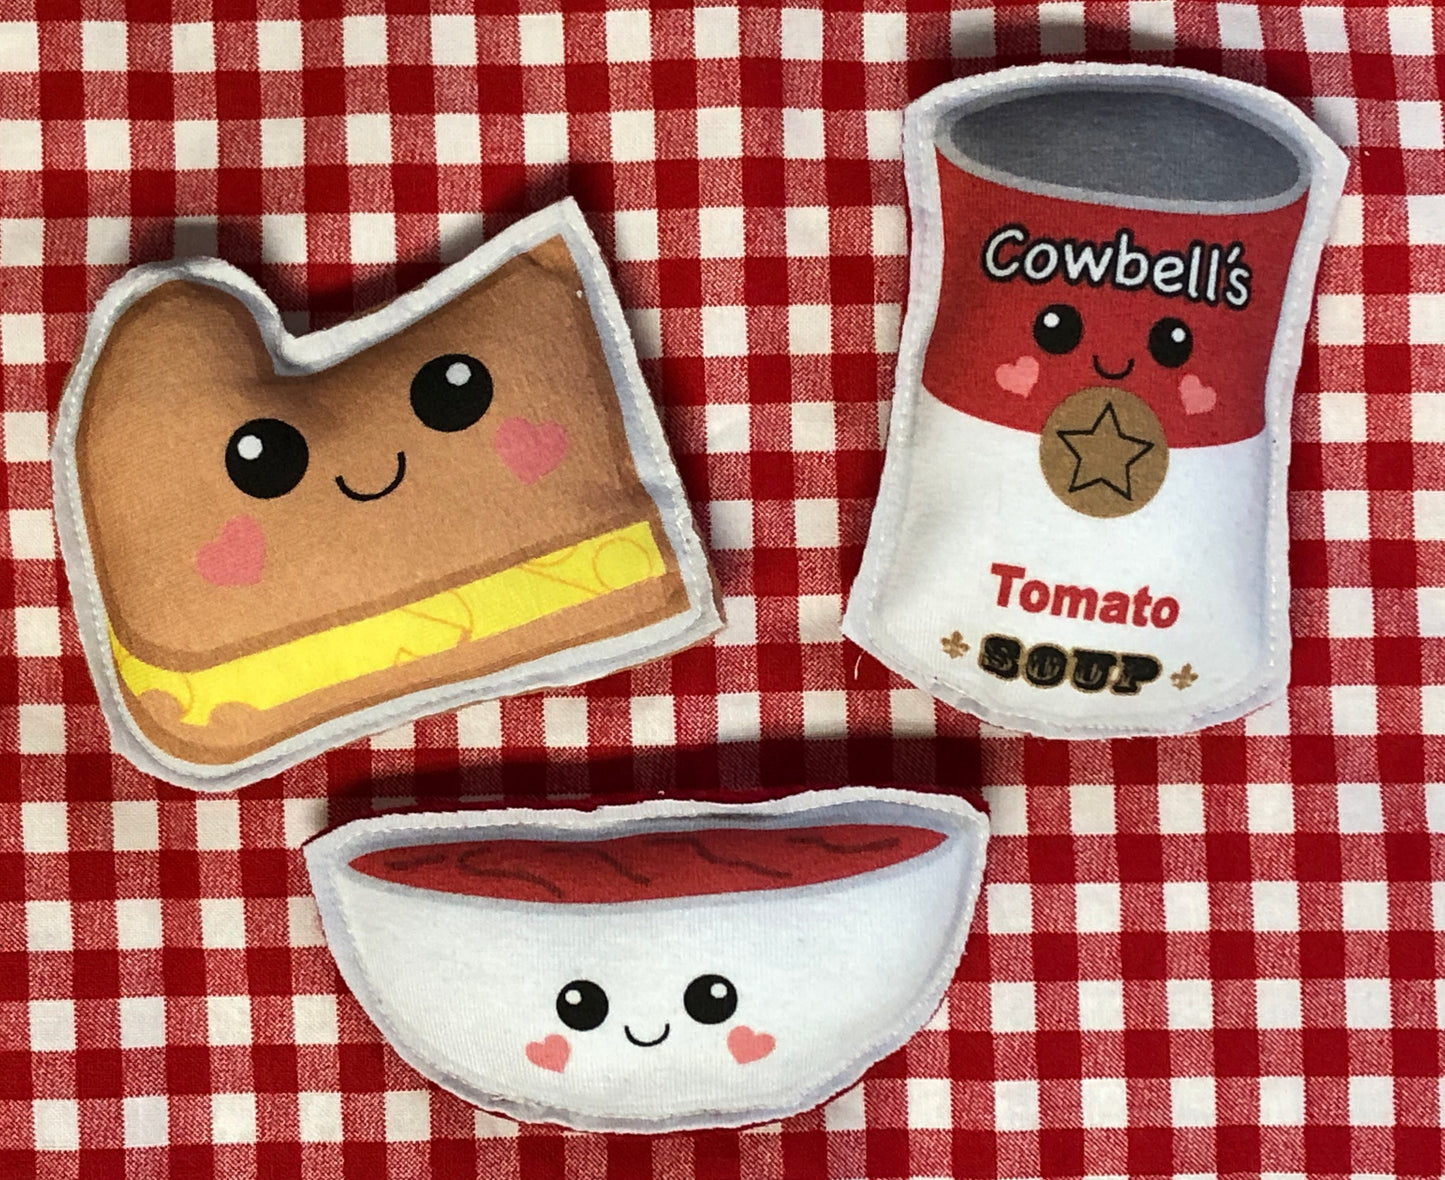 Cowbell's Tomato Soup Micro panel